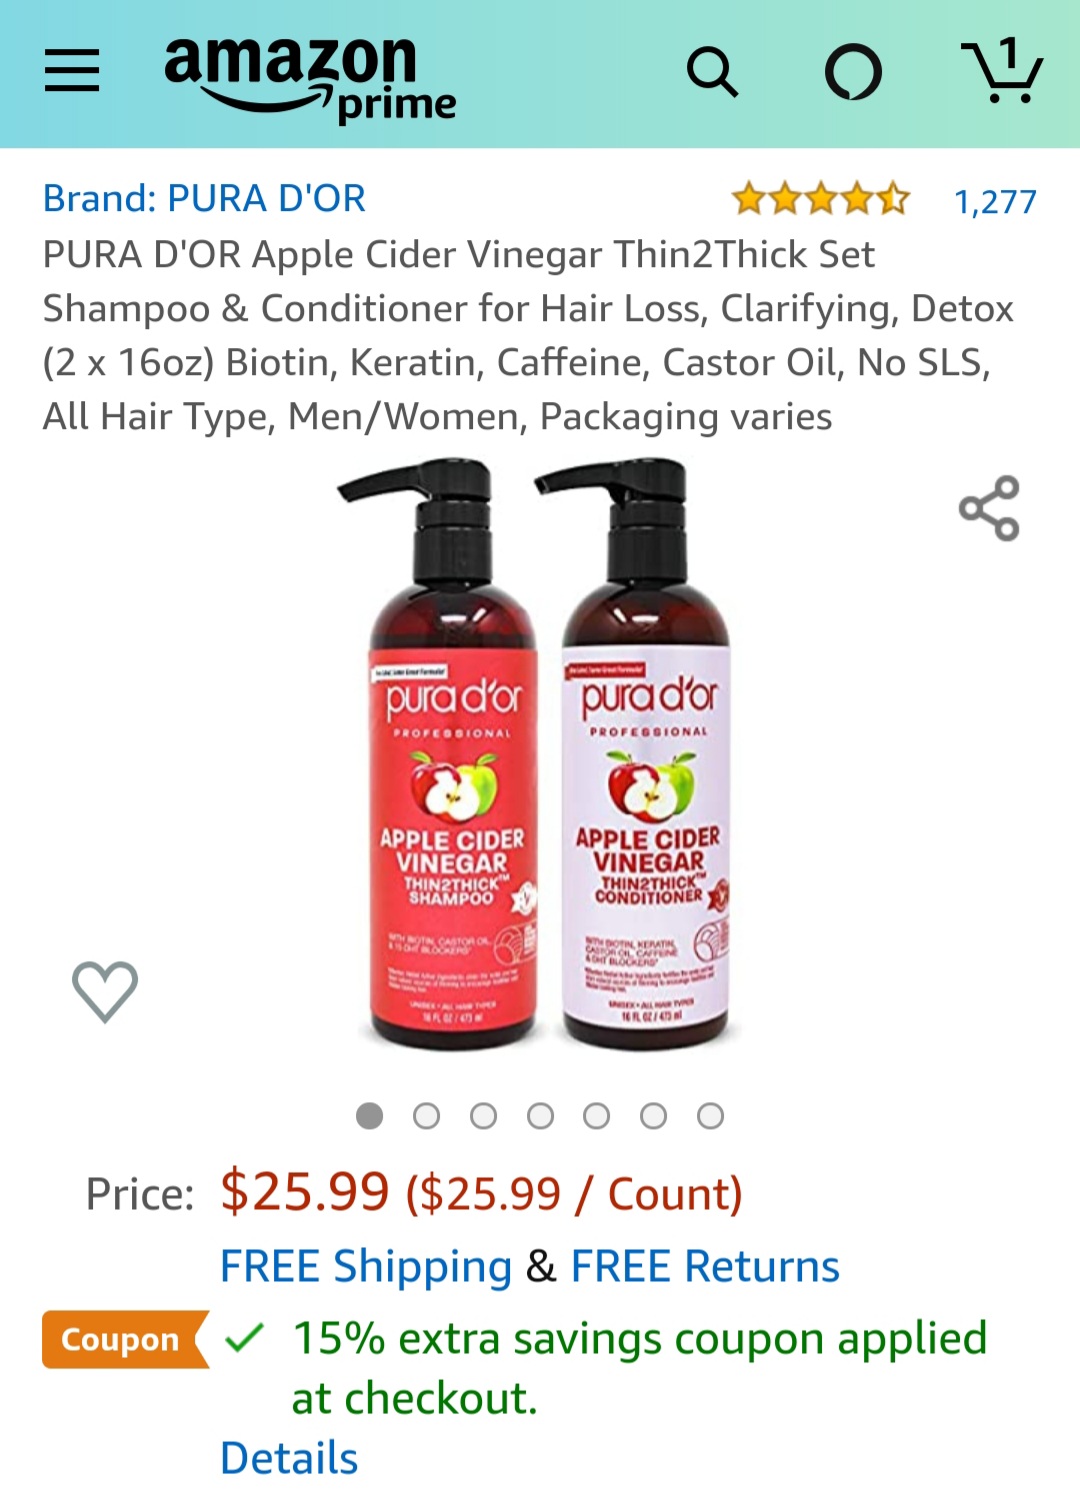 PURA D'OR Apple Cider Vinegar Thin2Thick Set Shampoo & Conditioner洗护套装 for Hair Loss, Clarifying, Detox (2 x 16oz) Biotin, Keratin, Caffeine, Castor Oil, No SLS, All Hair Type, Men/Women